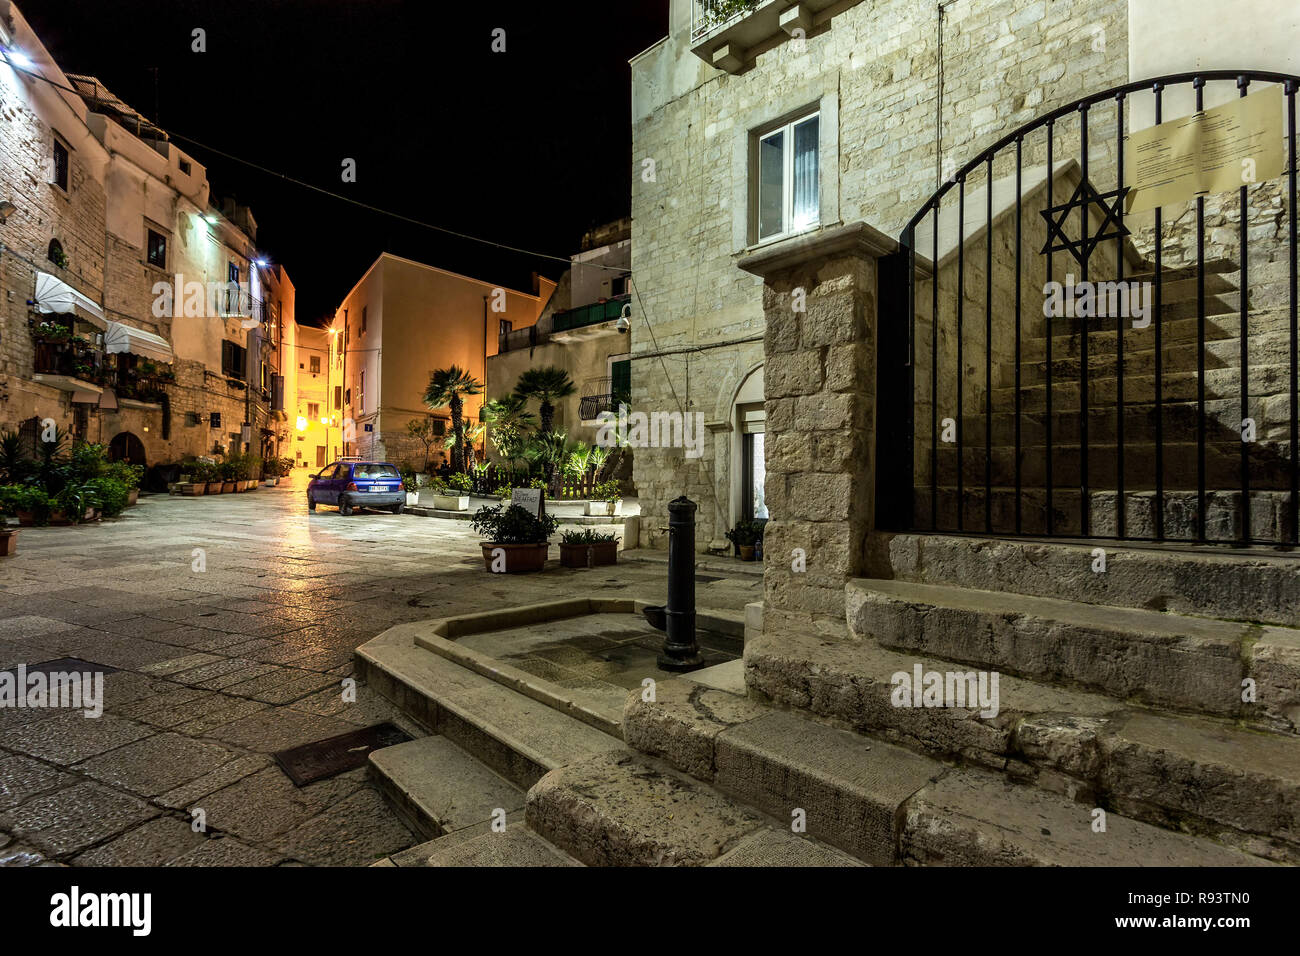 The Scola Grande synagogue of the ancient Jewish  ghetto of Trani at night. Trani, province of Barletta-Andria-Trani, Apulia, Italy, Europe Stock Photo